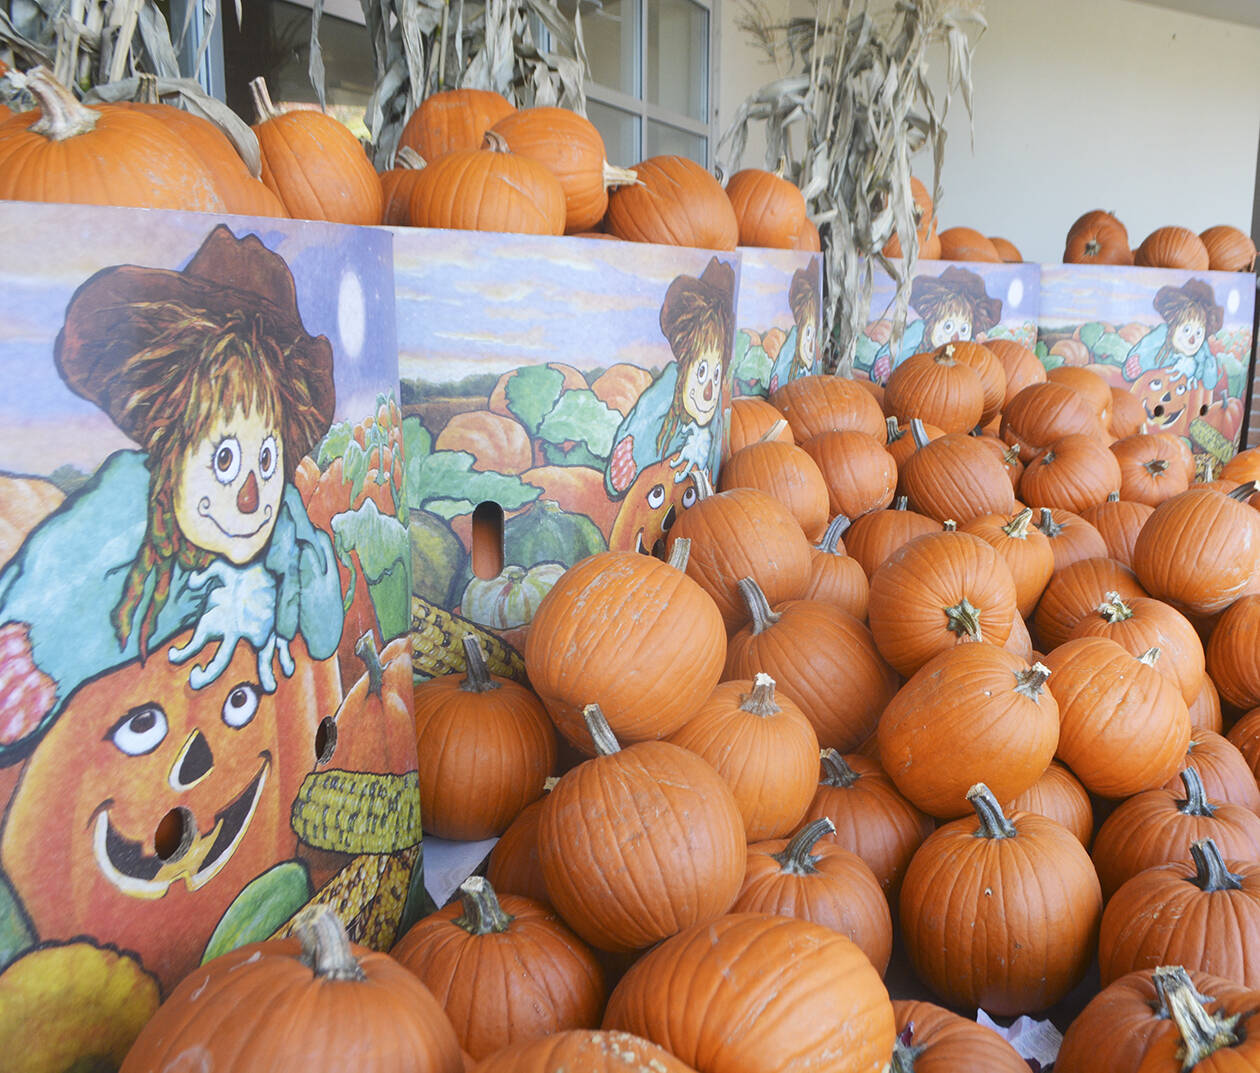 Pumpkins on display at Safeway. Steve Powell/Bainbridge Island Review photos